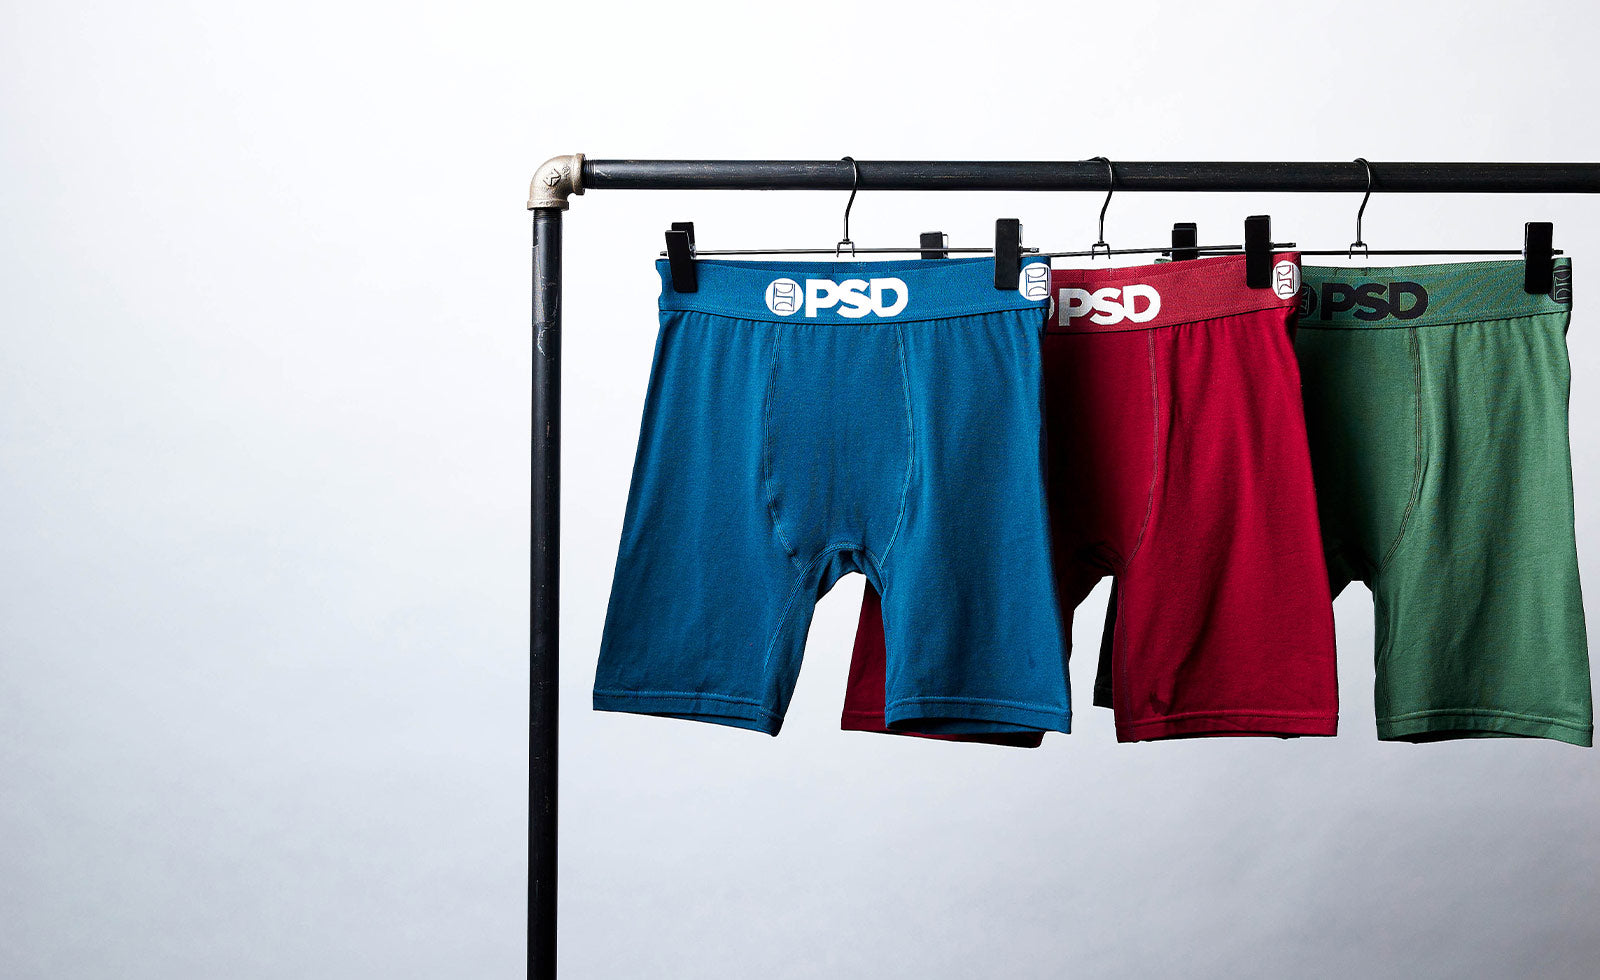 PSD, Underwear & Socks, Mens Psd Underwear